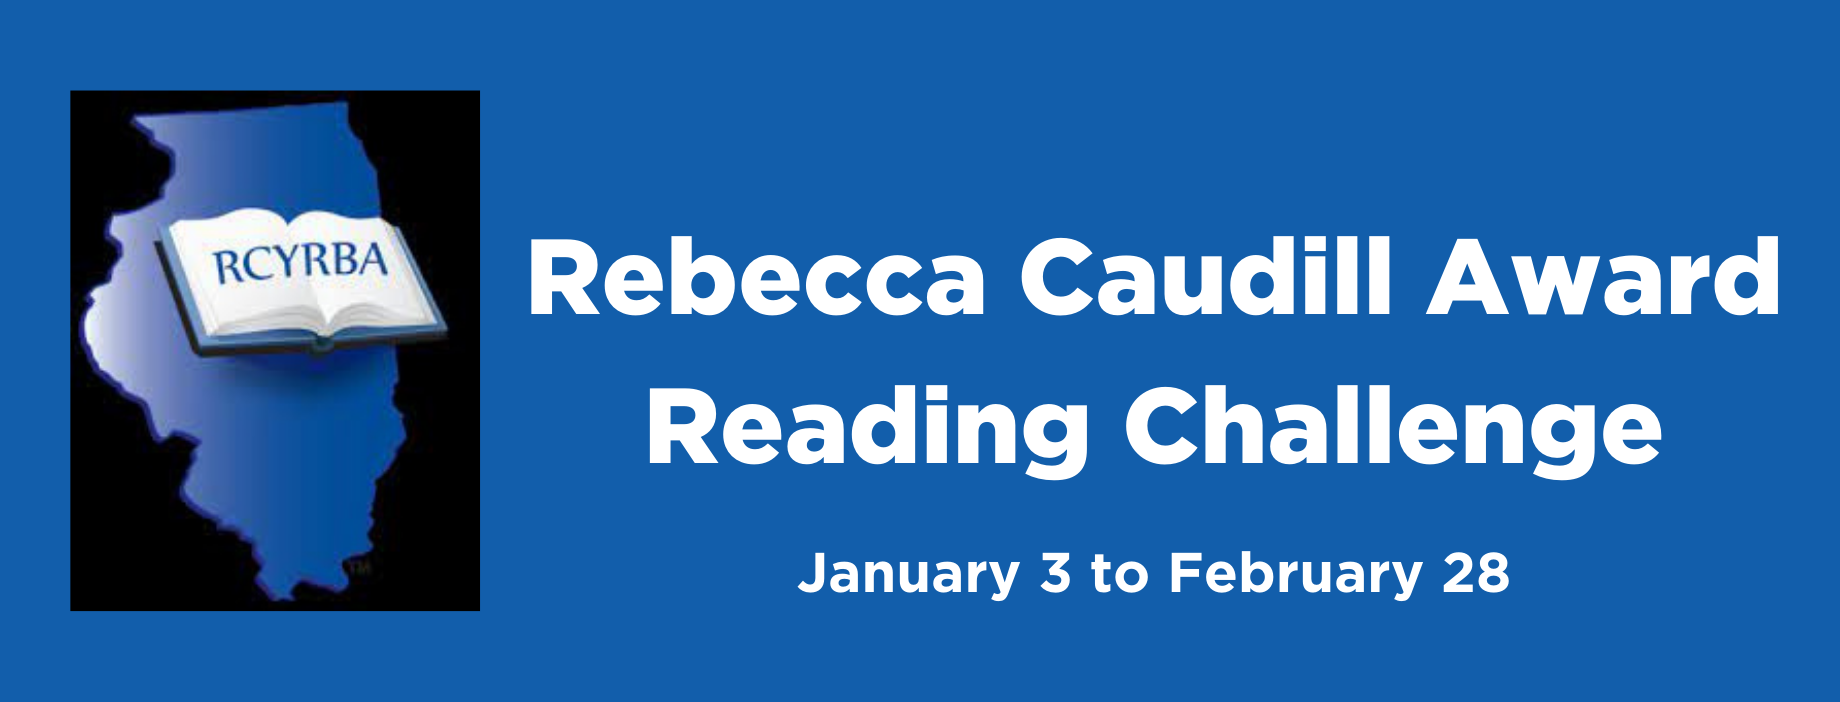 Rebecca Caudill Award Reading Challenge